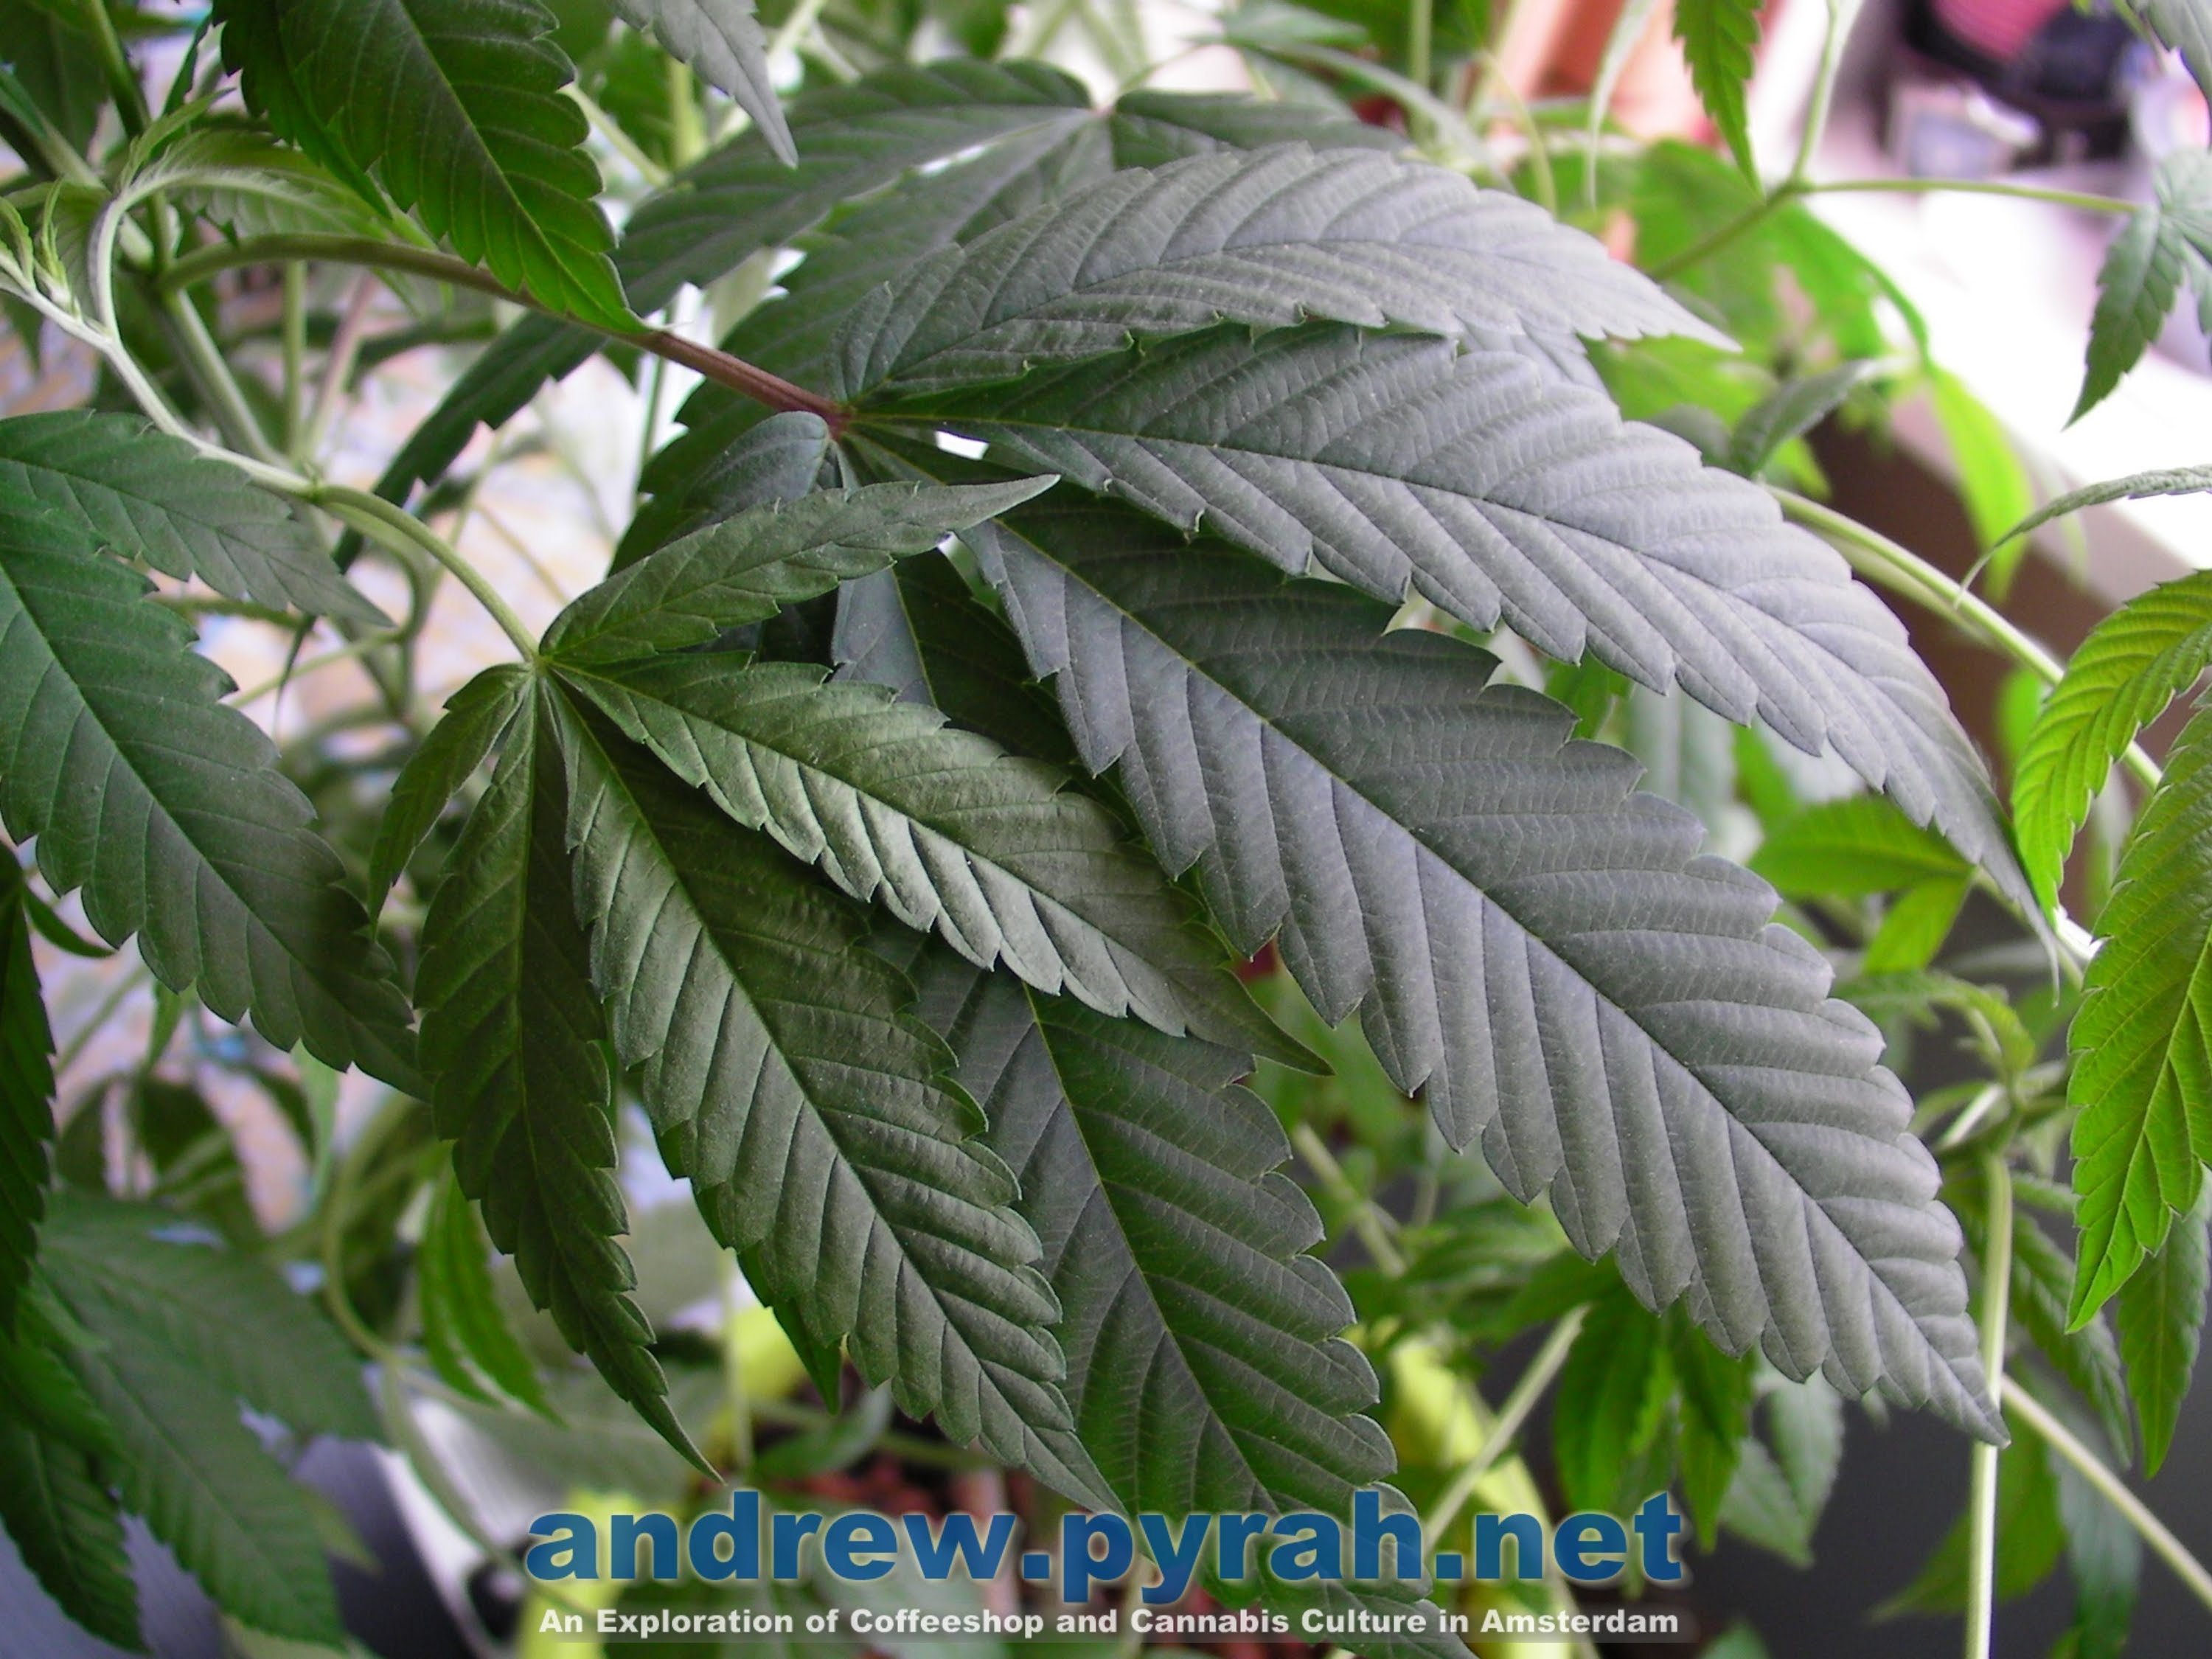 DNA Genetics Mexican Haze X Sleestack (Mexslee) Cannabis Plant Update May 2013